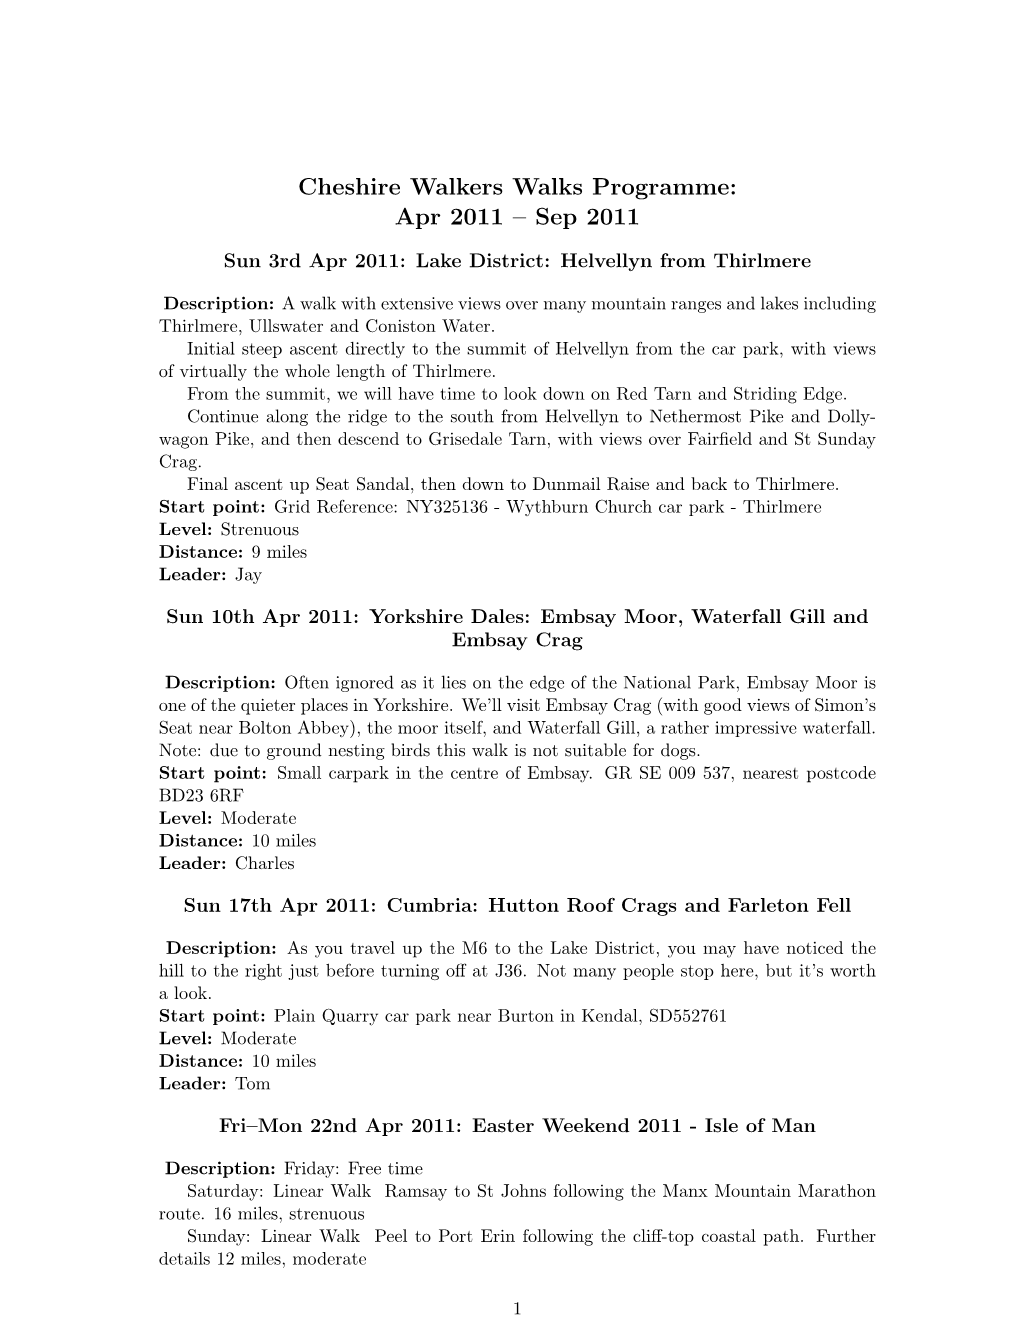 Cheshire Walkers Walks Programme: Apr 2011 – Sep 2011